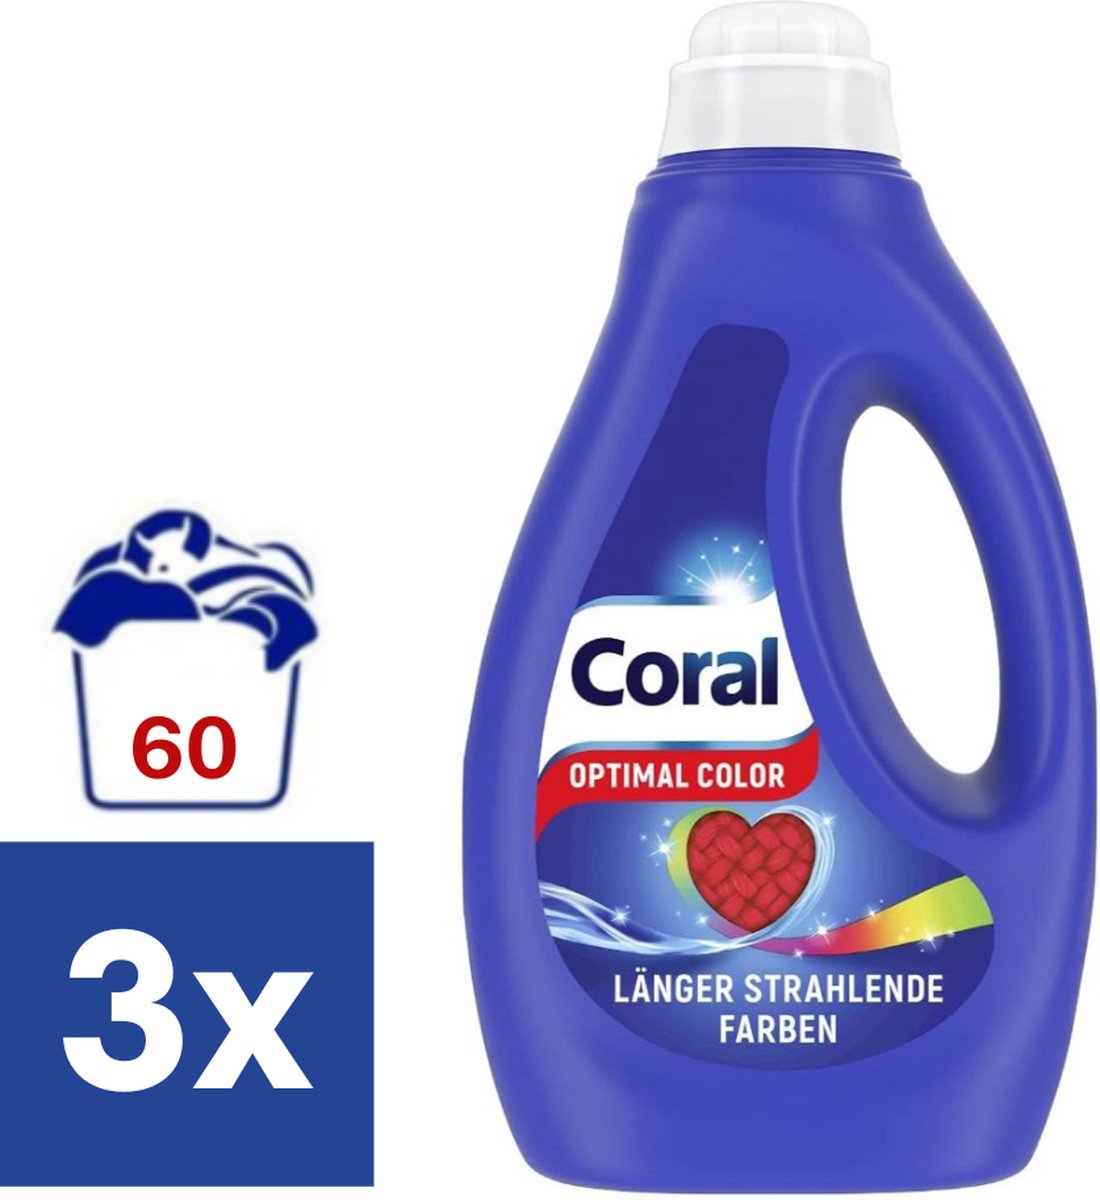 Coral Optimal Color Vloeibaar Wasmiddel - 3 x 1 l (60 wasbeurten)